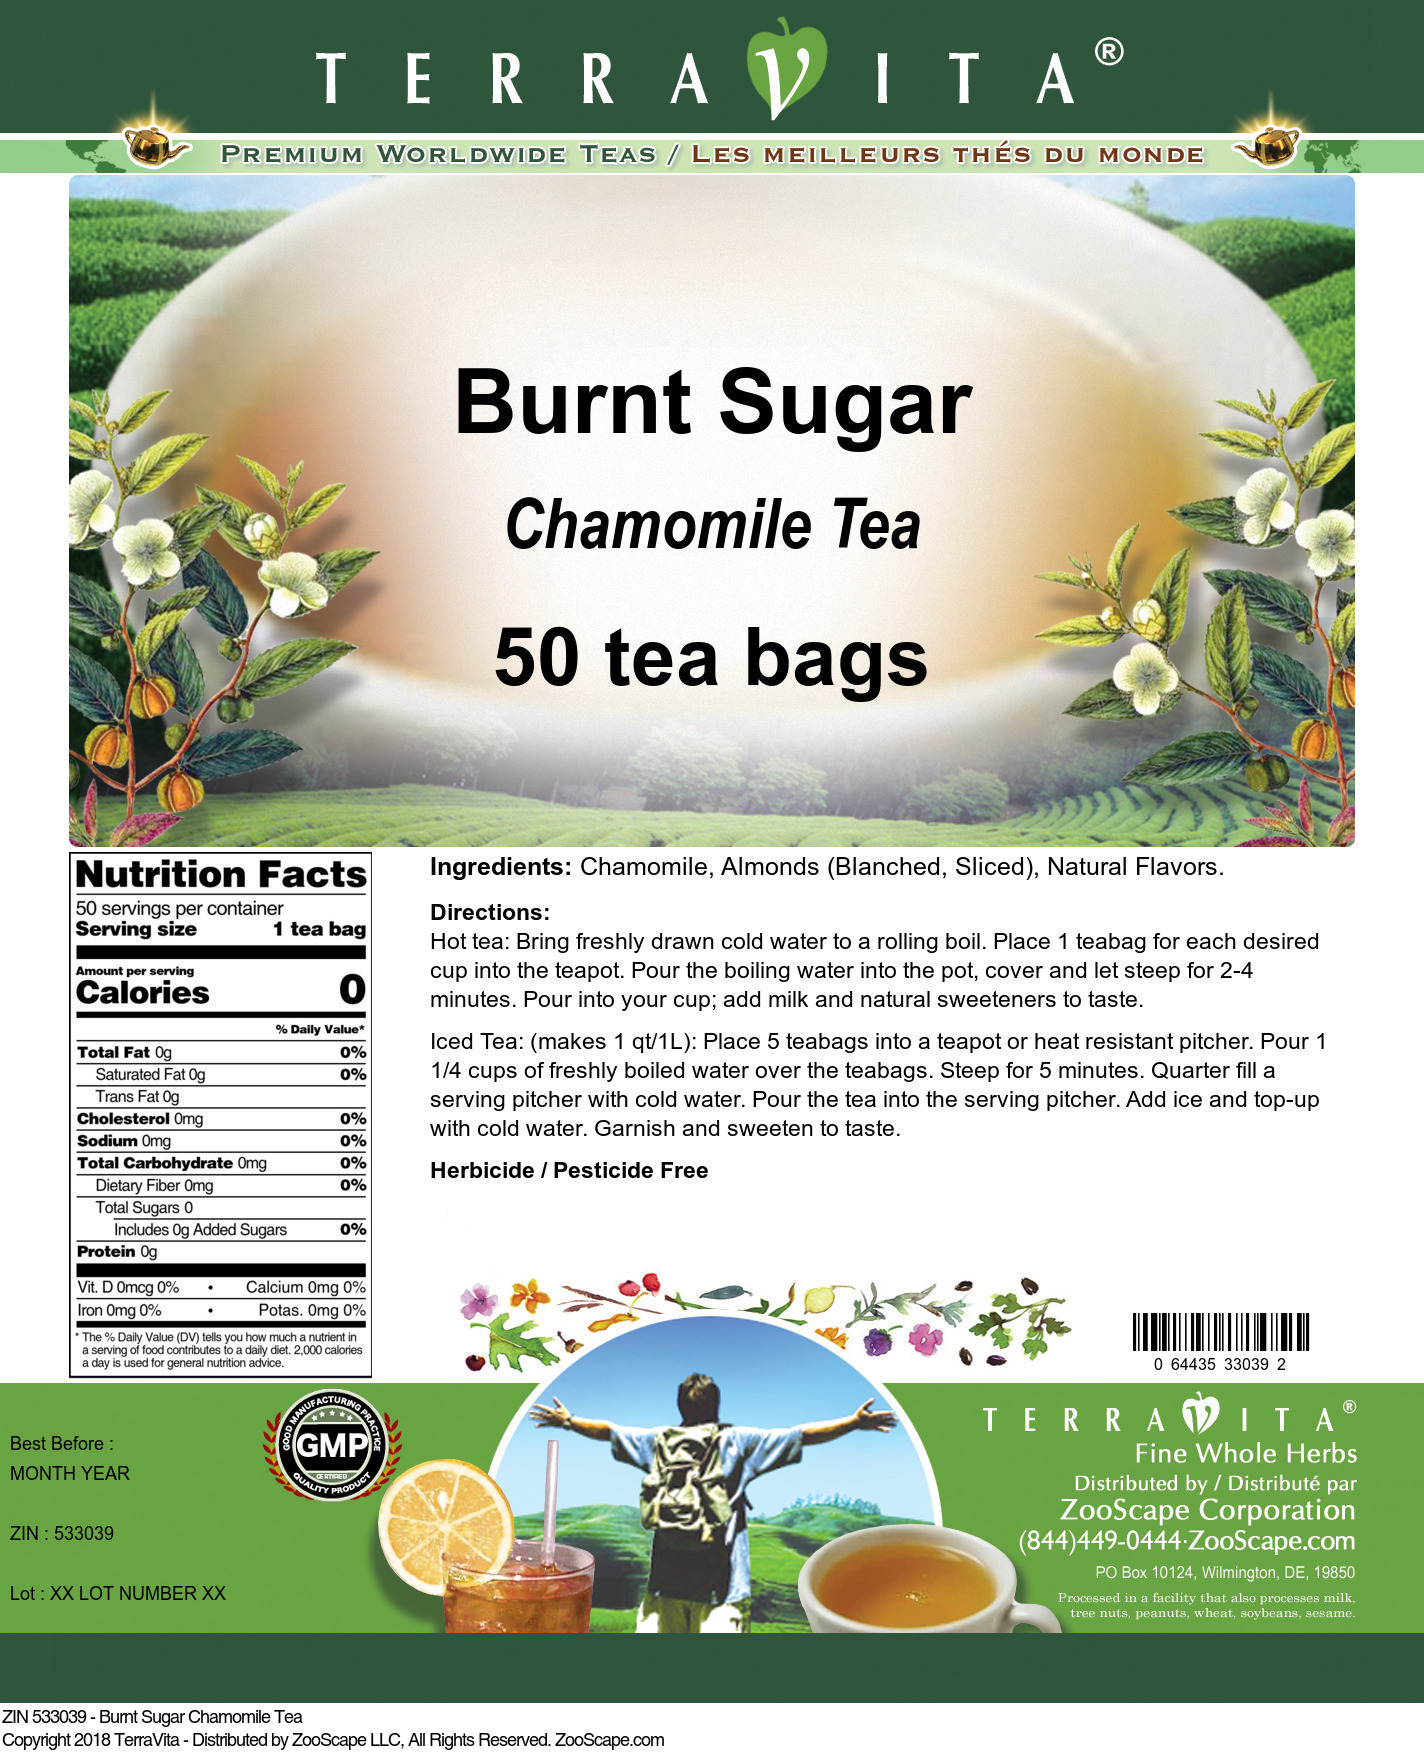 Burnt Sugar Chamomile Tea - Label